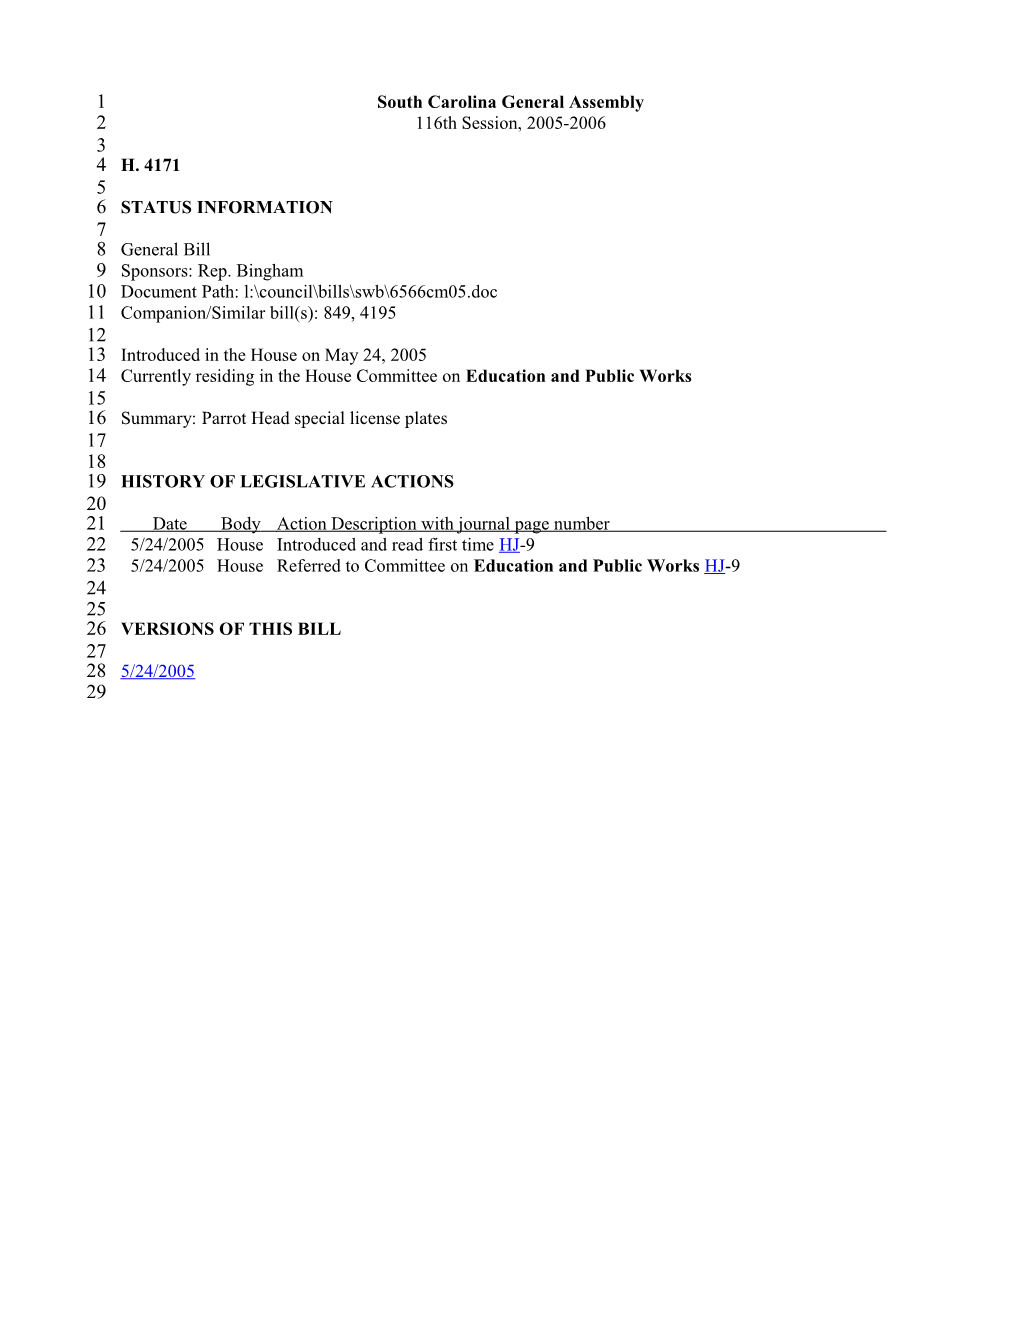 2005-2006 Bill 4171: Parrot Head Special License Plates - South Carolina Legislature Online